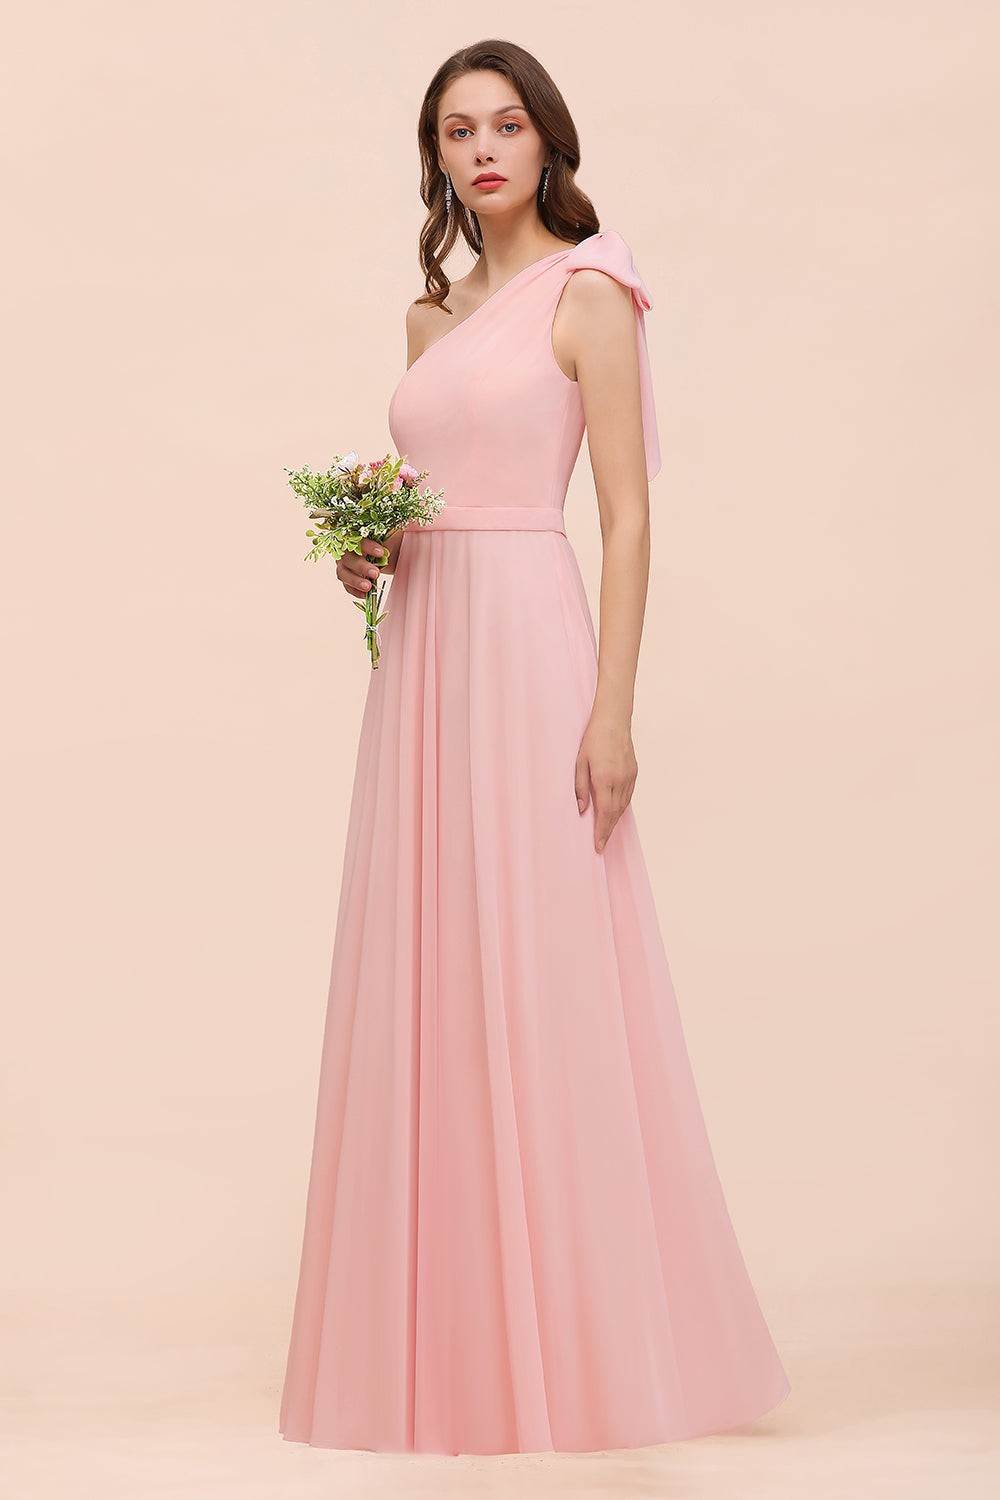 Chic One Shoulder Sleeveless Pink Chiffon Bridesmaid Dress with Bow-27dress